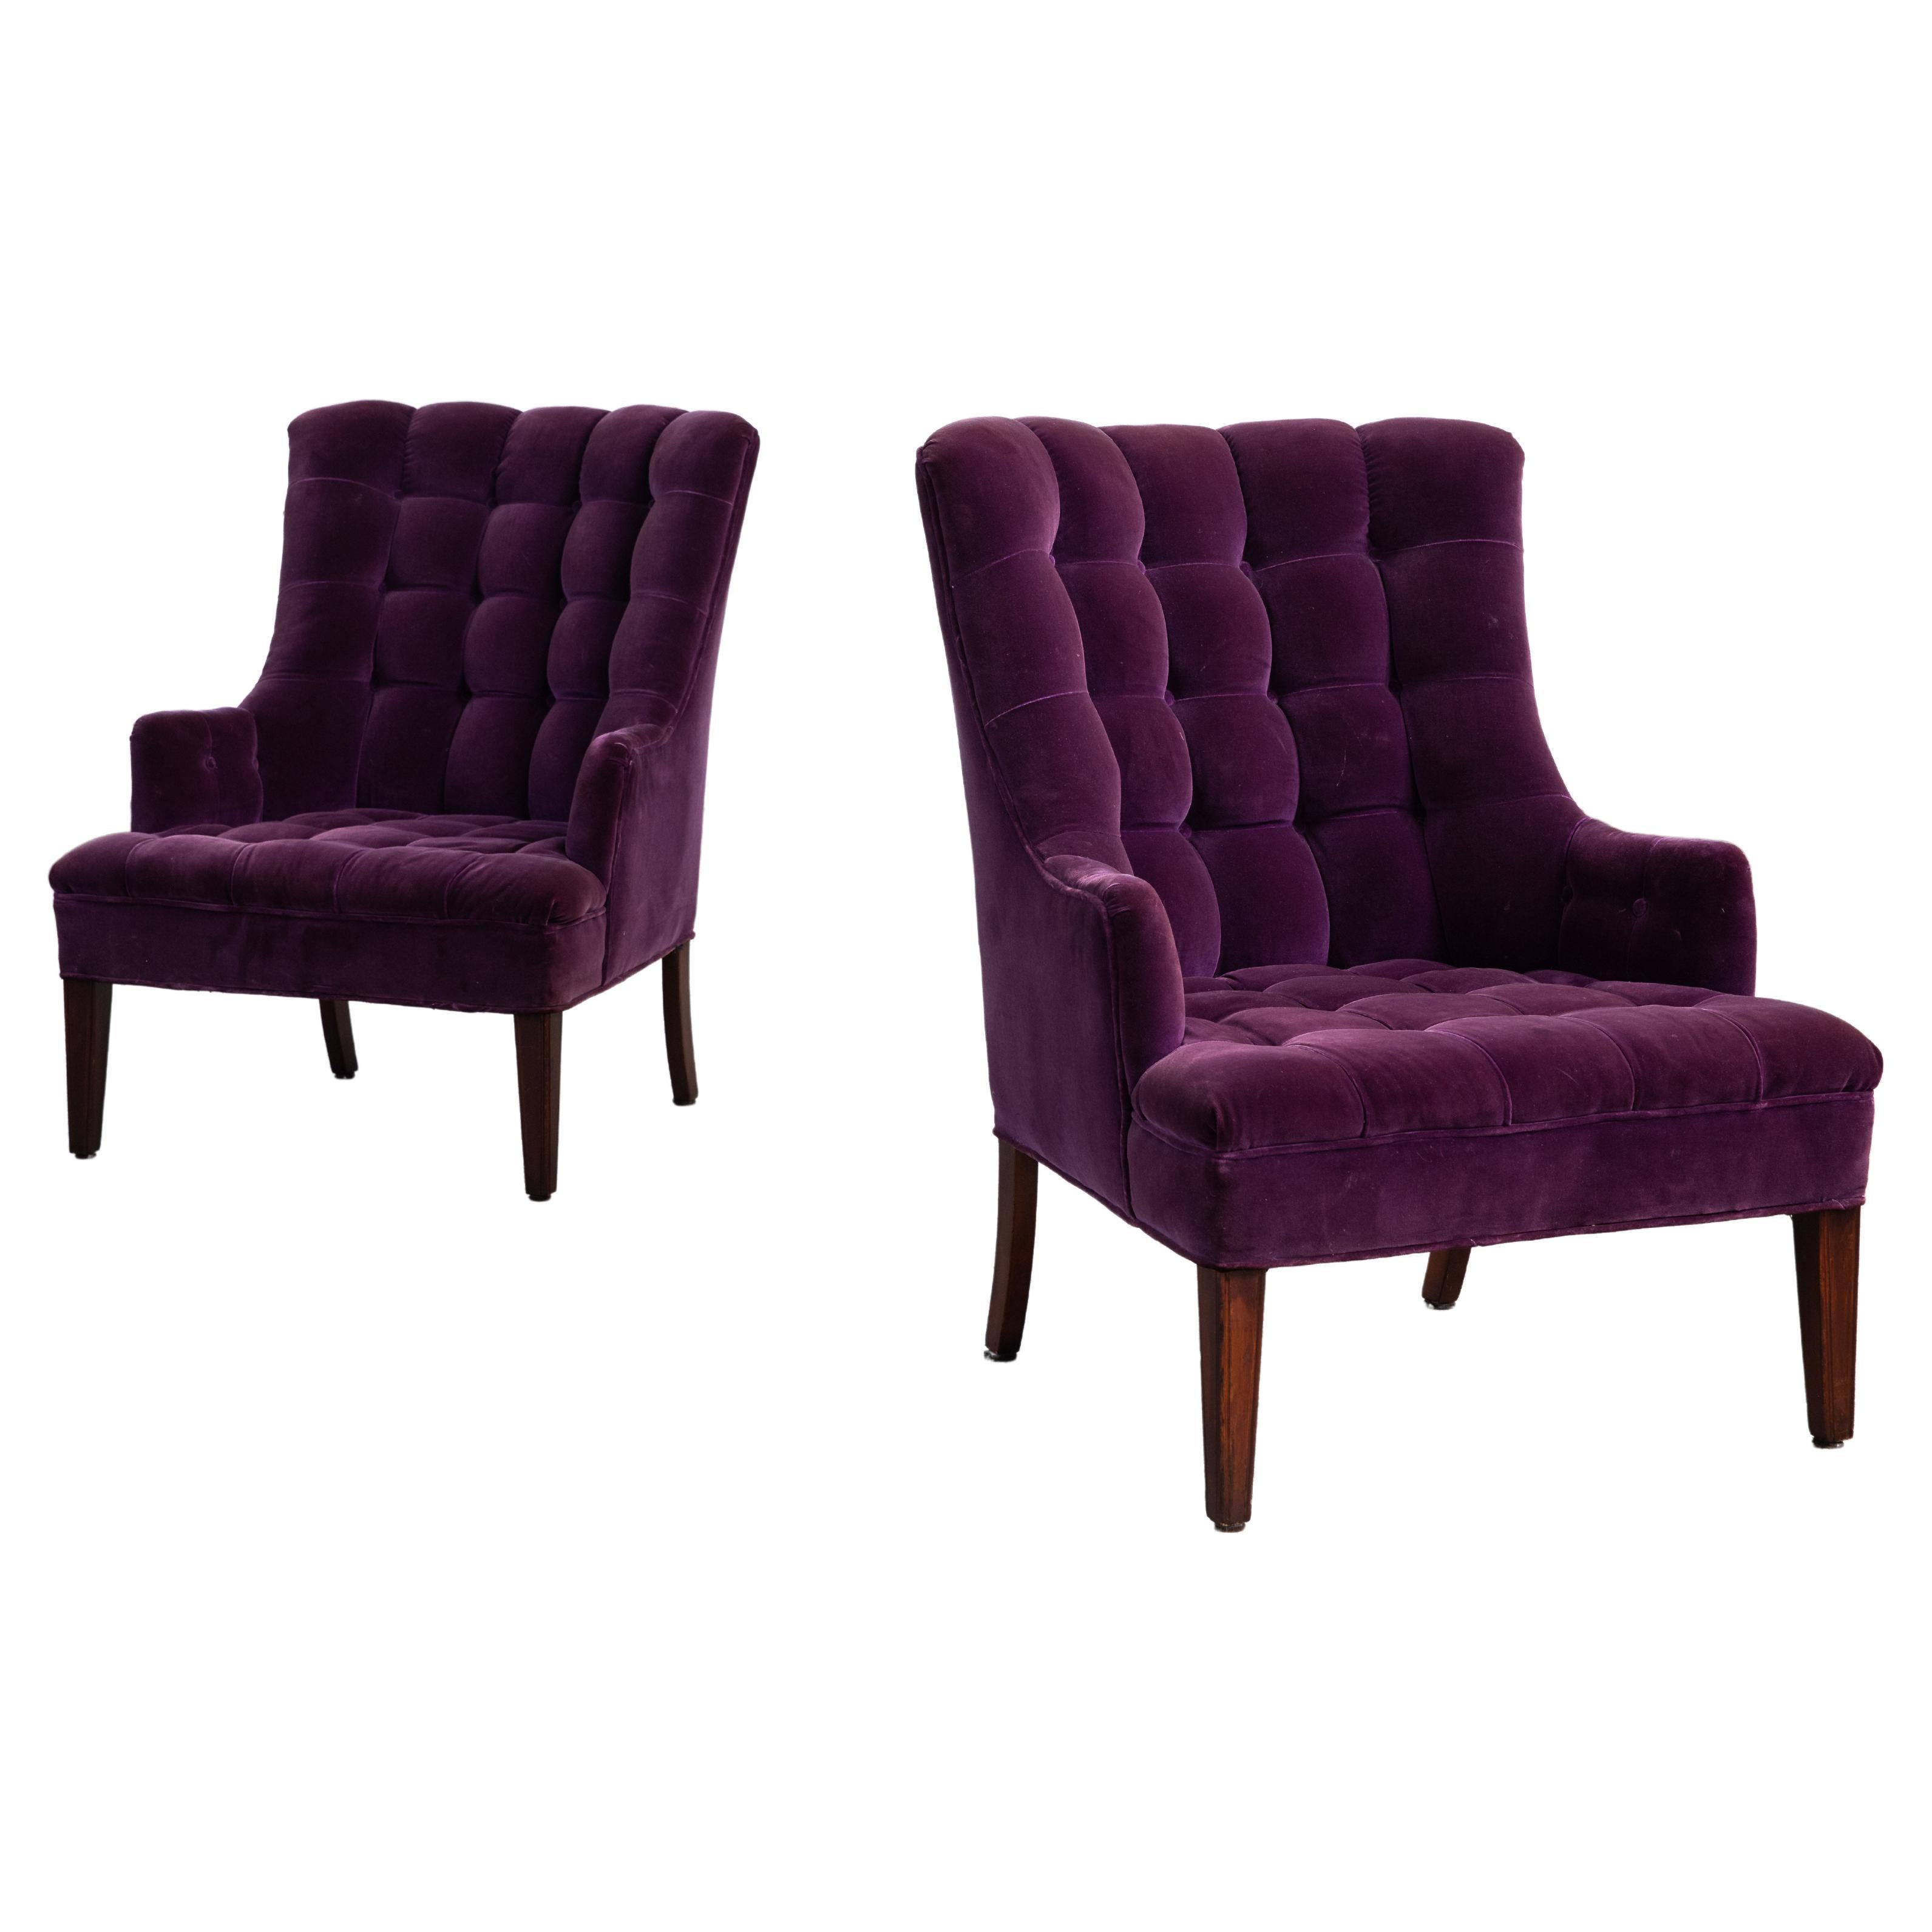 Pair of Scandinavian Slipper Chairs in Purple Velvet, circa 1950's